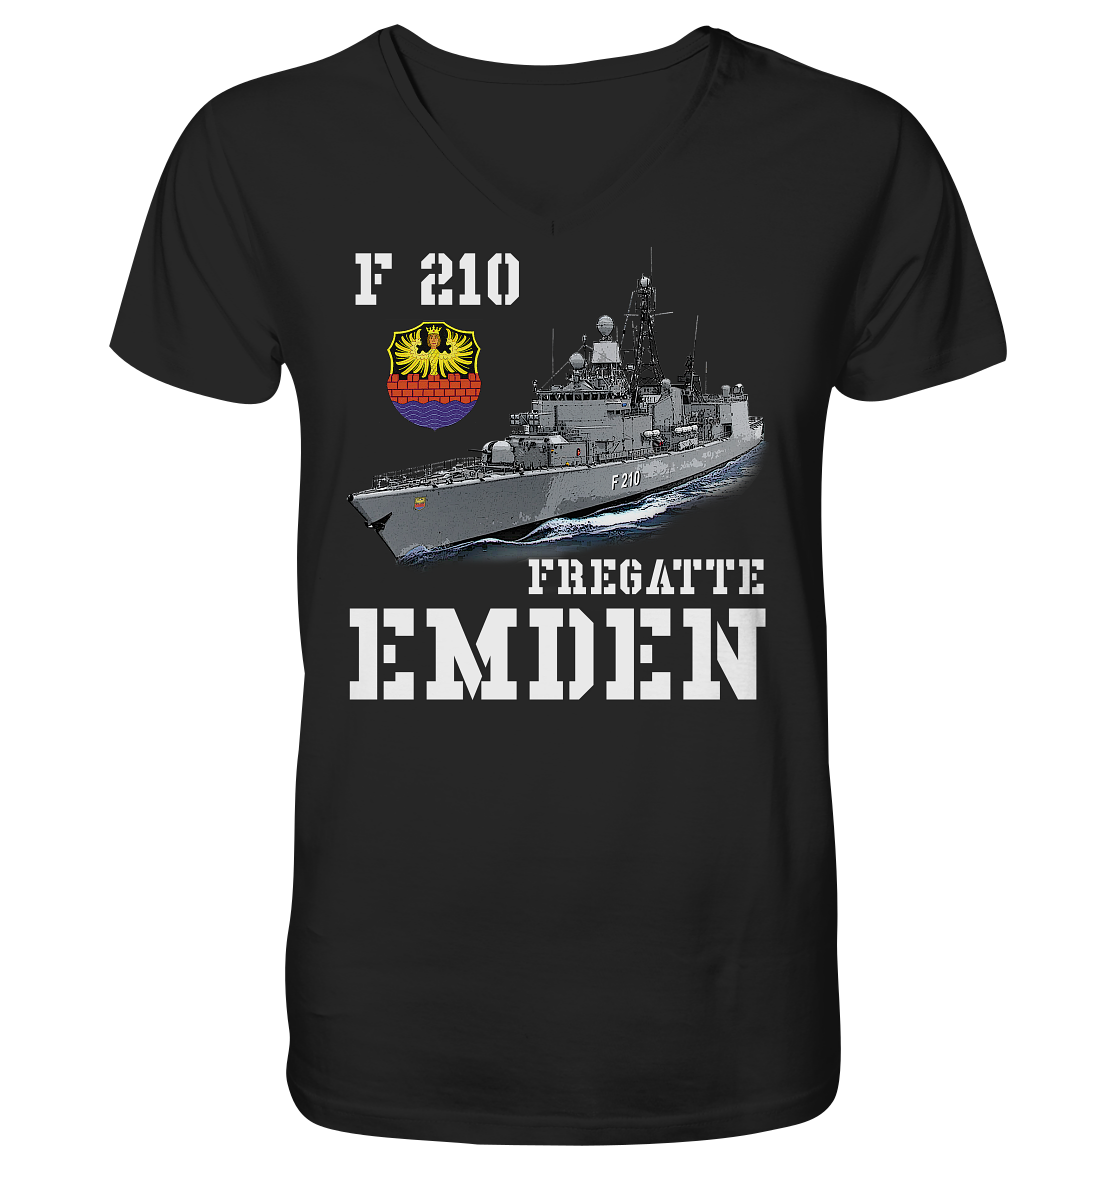 F210 Fregatte EMDEN - Mens Organic V-Neck Shirt